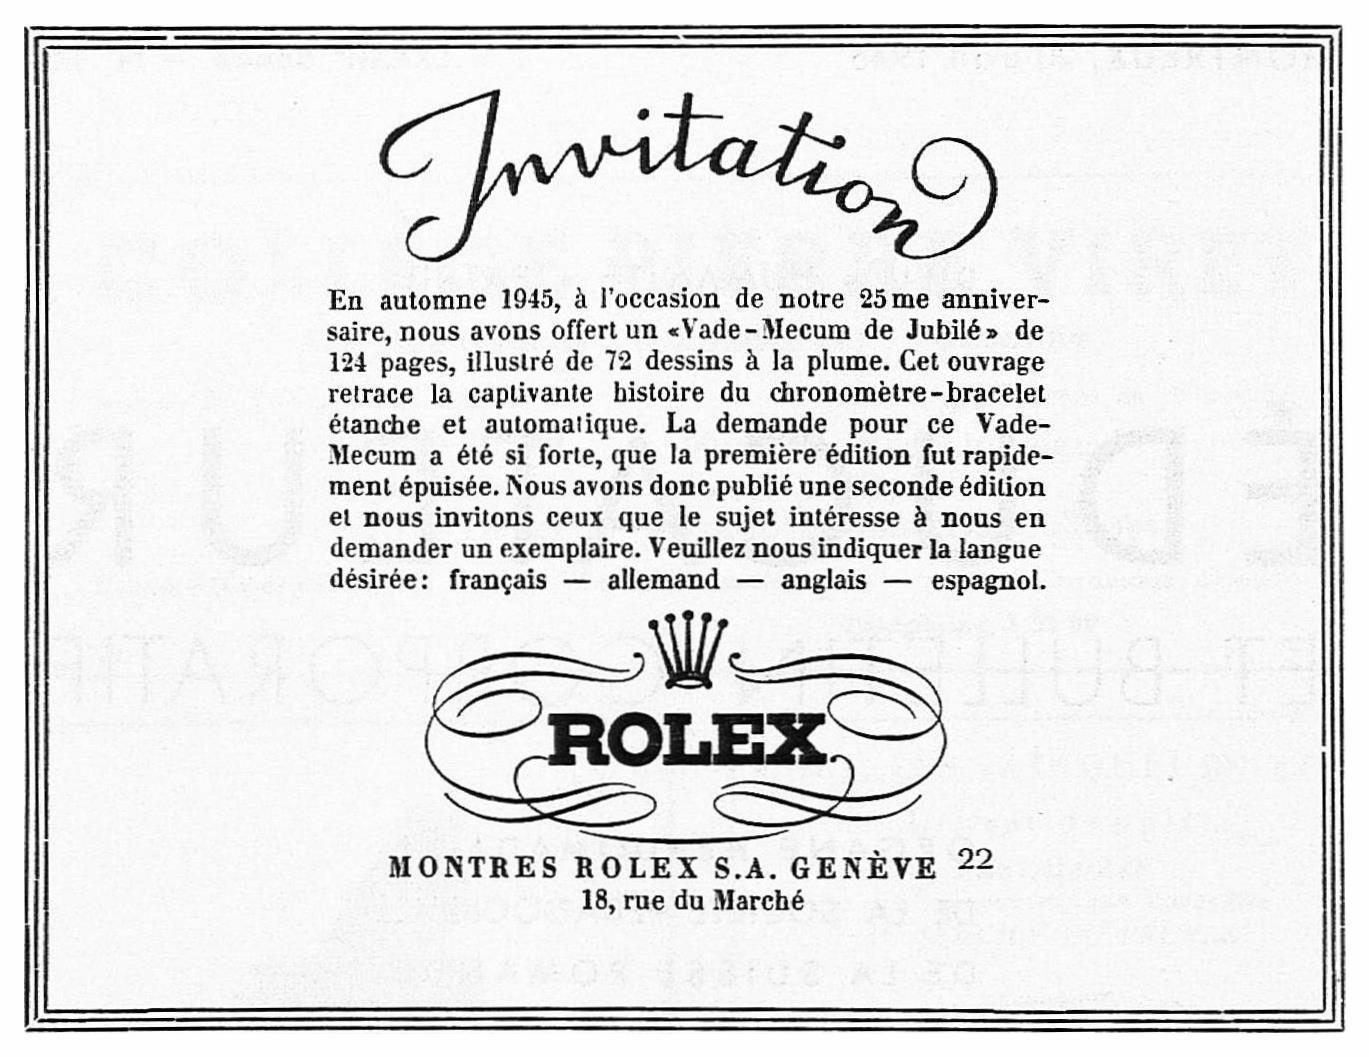 Rolex 1946 33.jpg